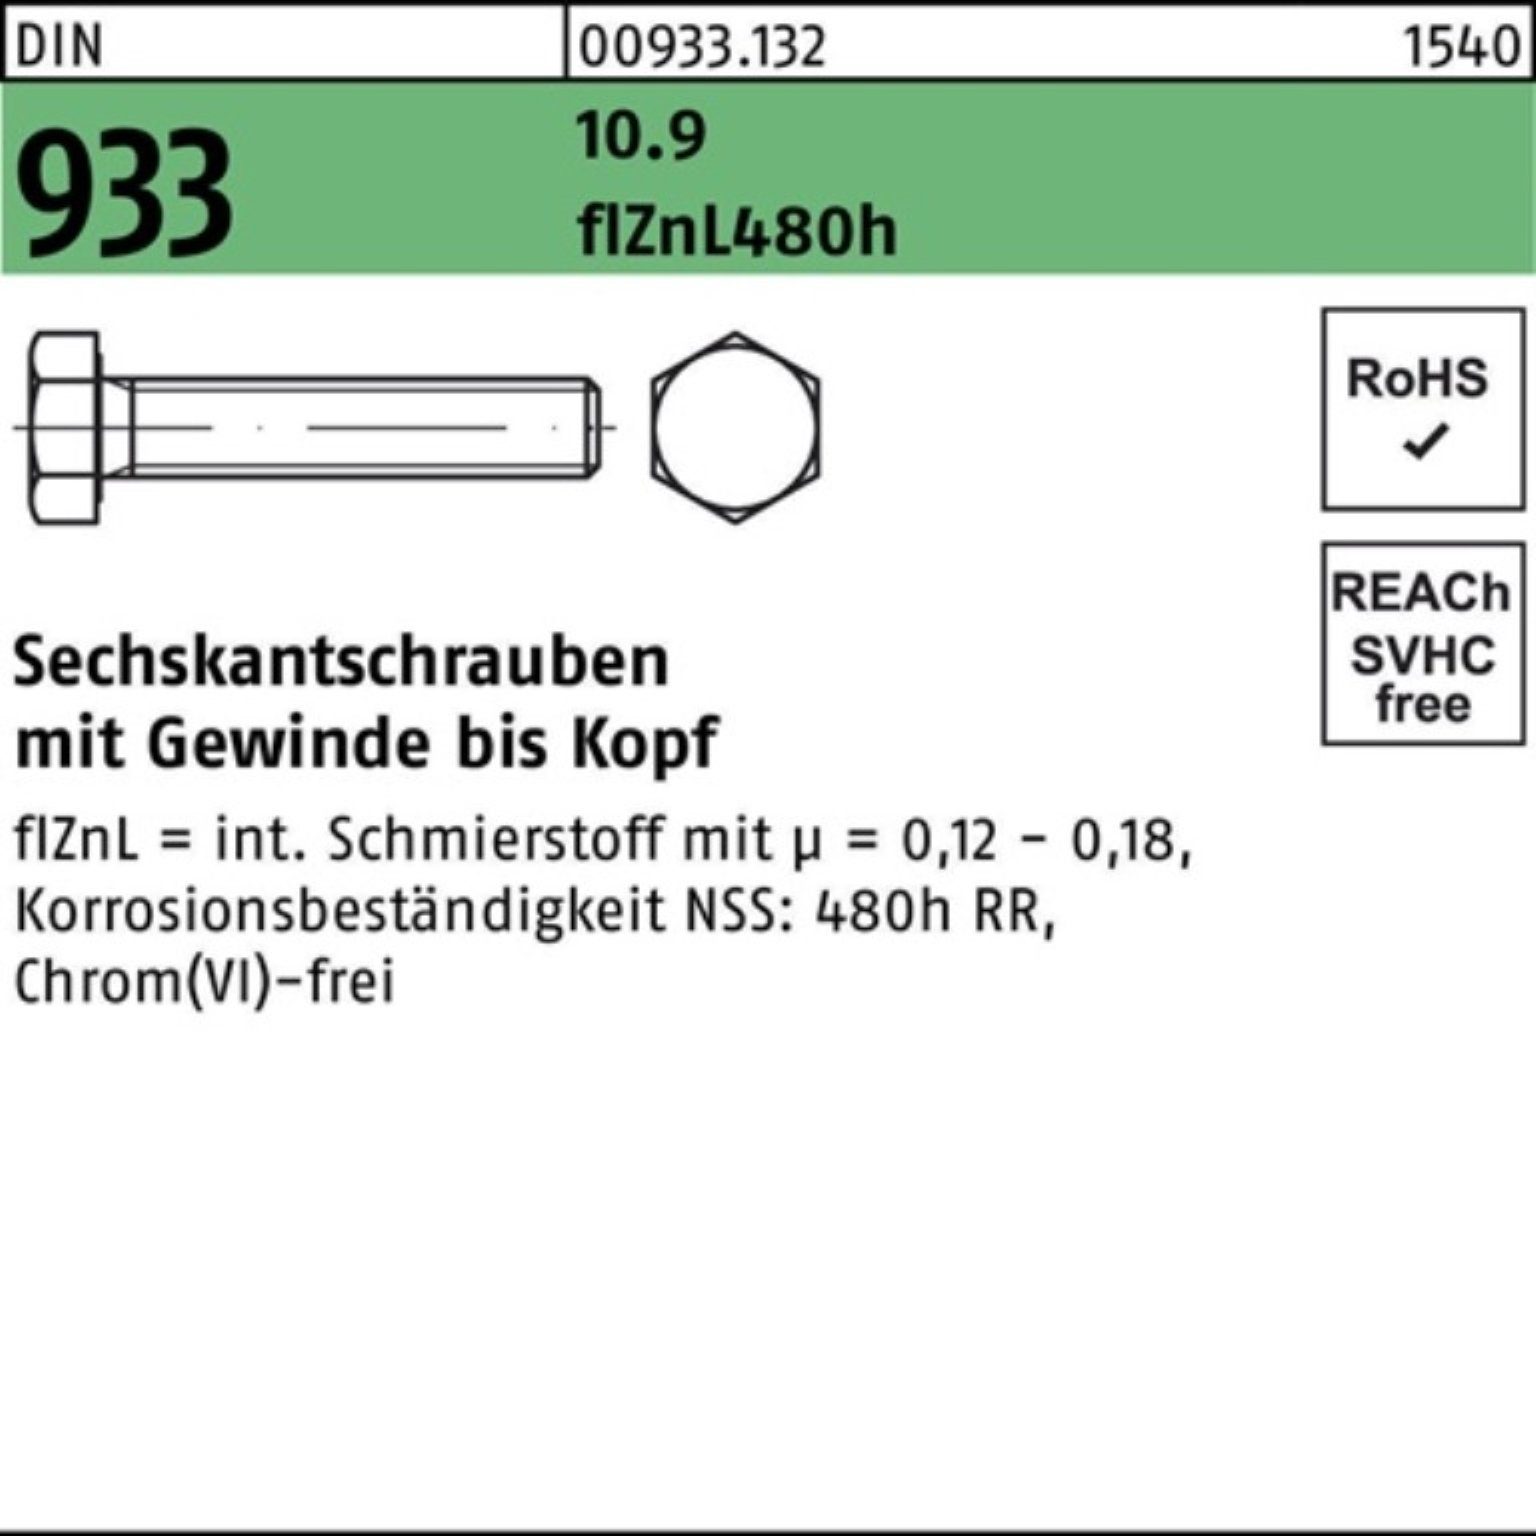 Reyher Sechskantschraube 200er Pack Sechskantschraube DIN 933 VG M8x 22 10.9 flZnL/nc/x/x/480h